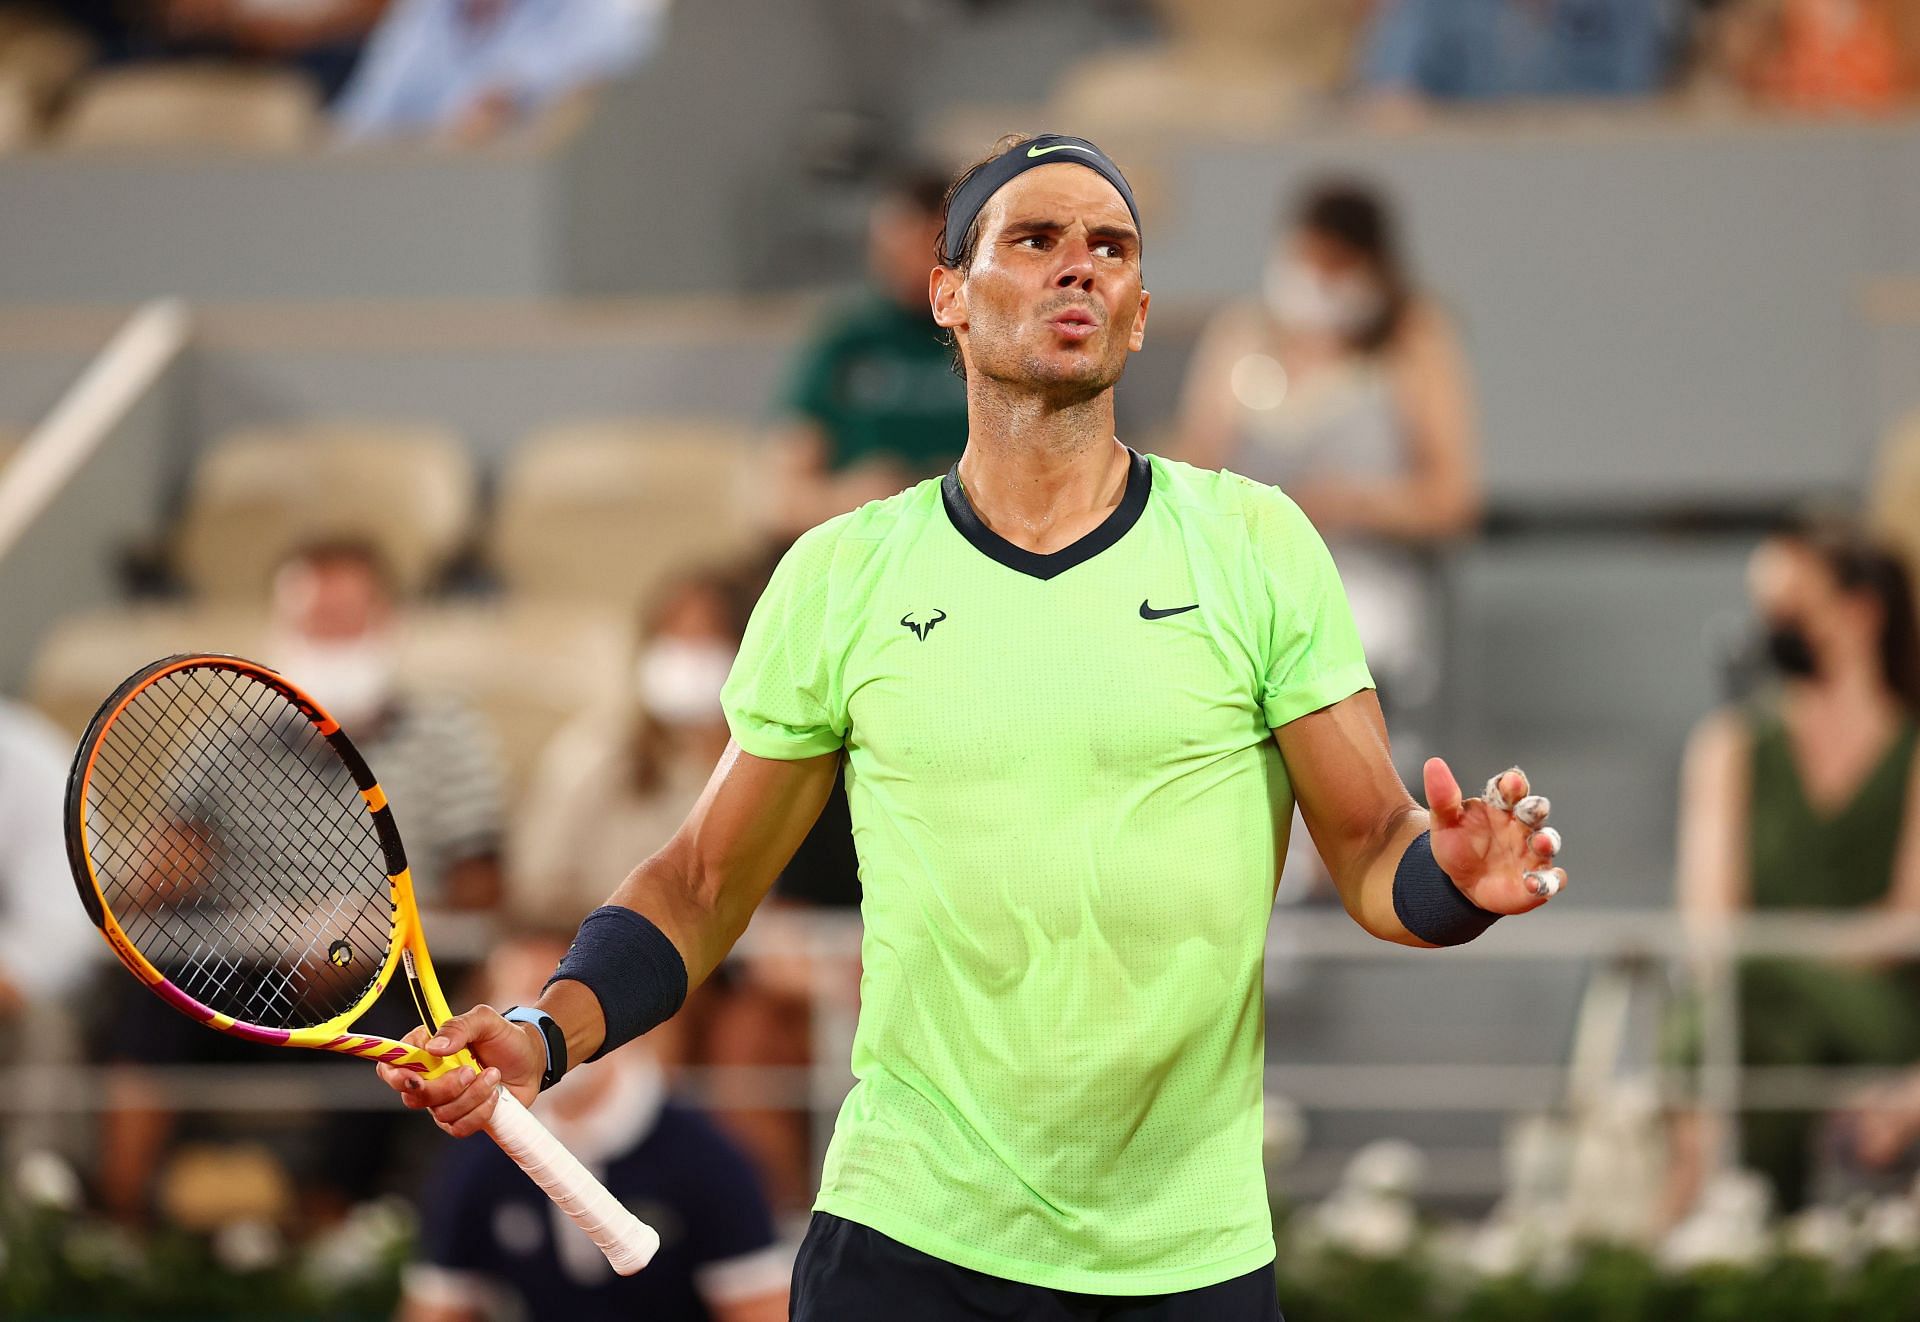 Rafael Nadal exacerbated his foot injury against Novak Djokovic in the 2021 French Open